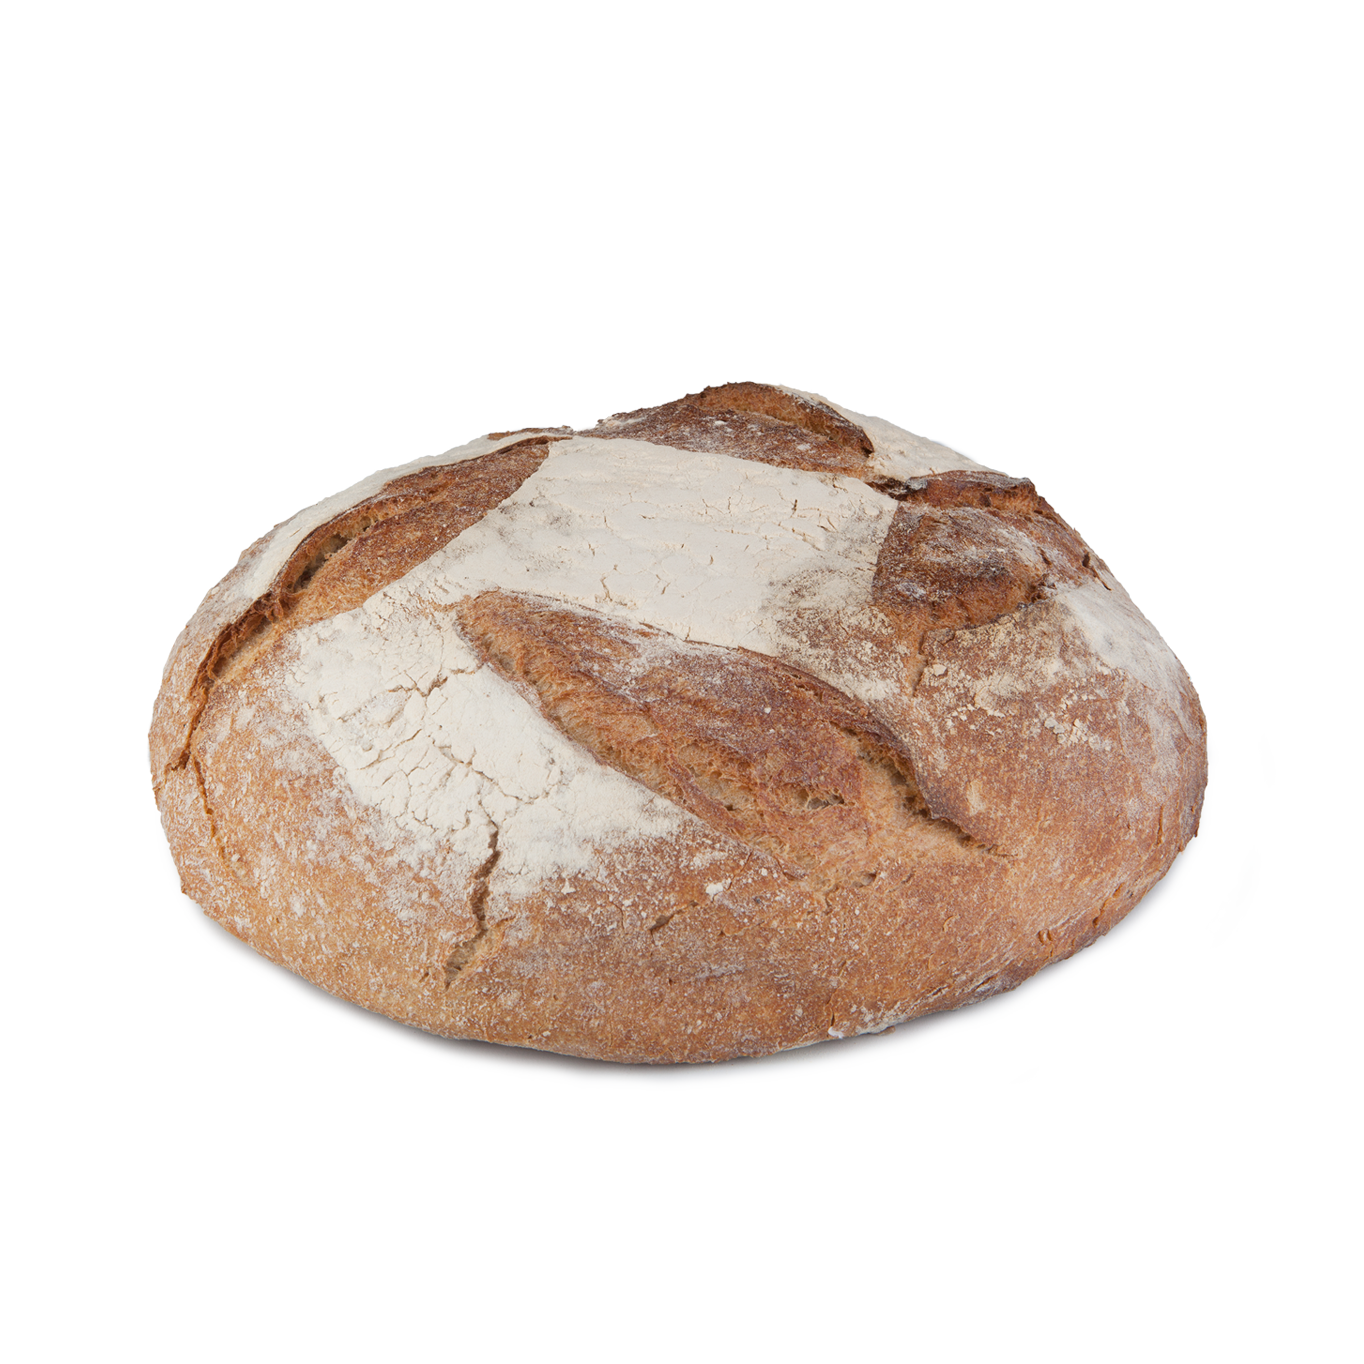 Pan de masa madre – Estado Natural